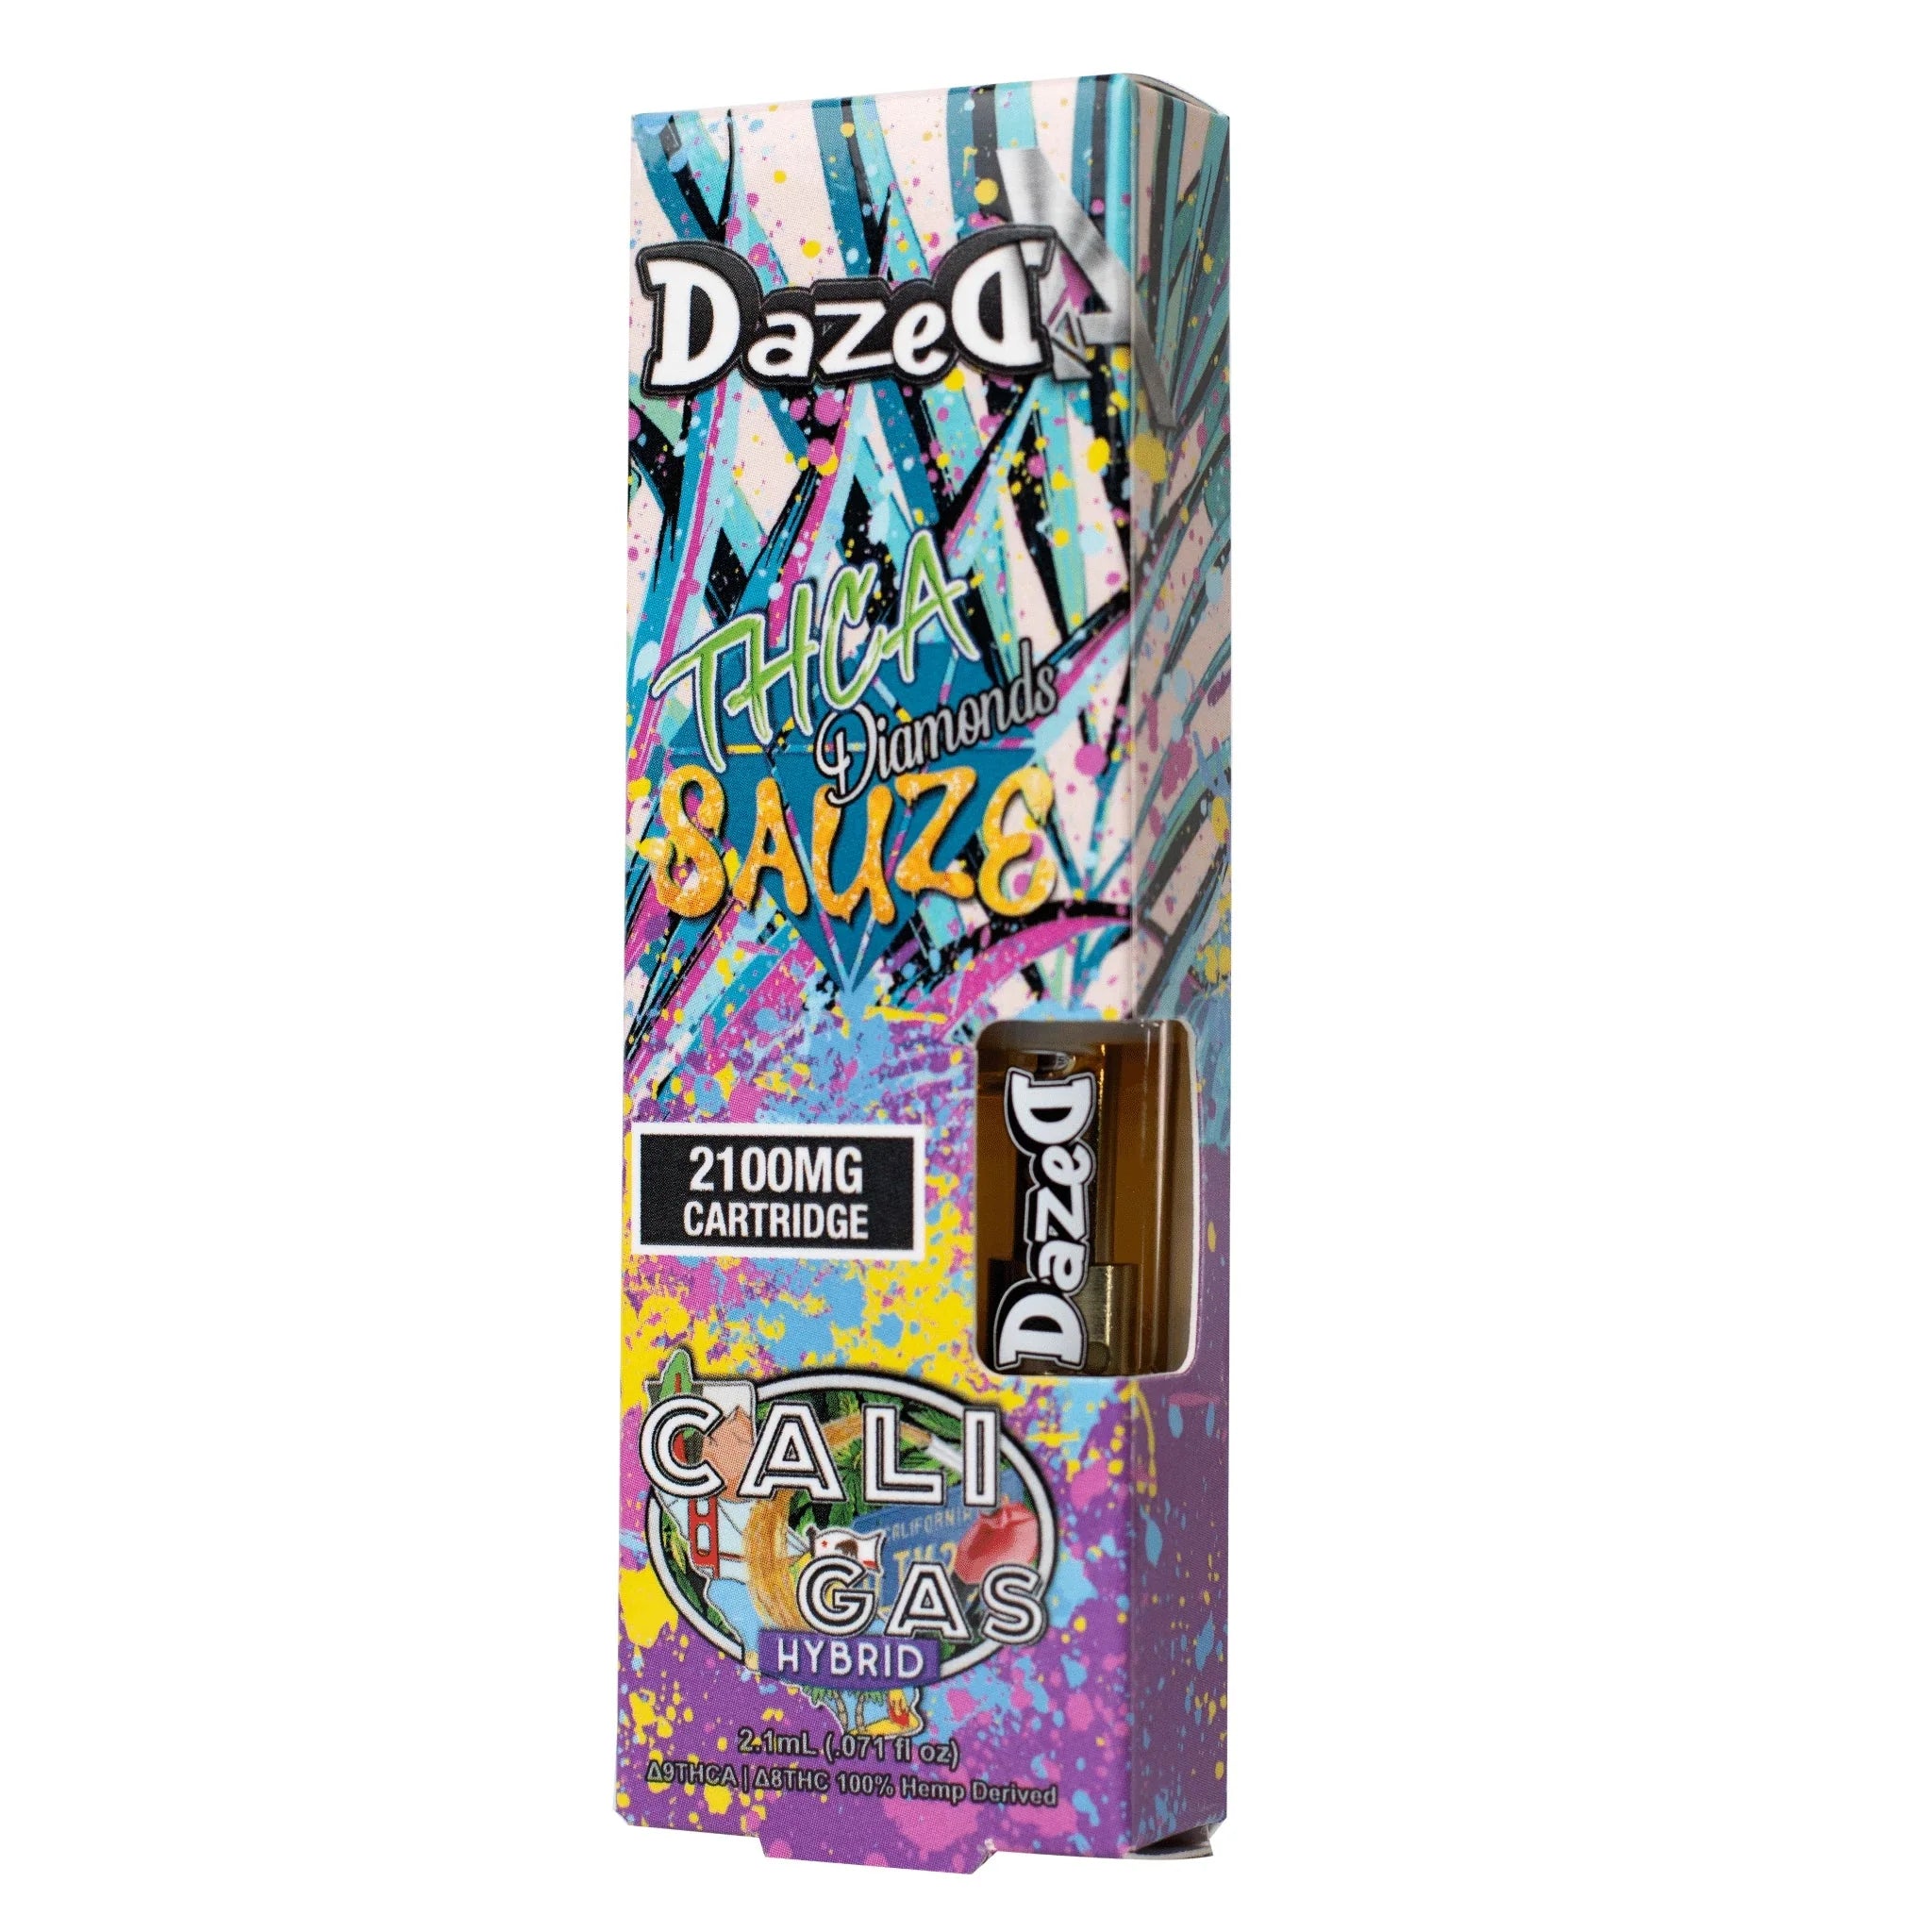 DazedA THCA Diamonds Sauze Cartridges (2.1g) Best Price